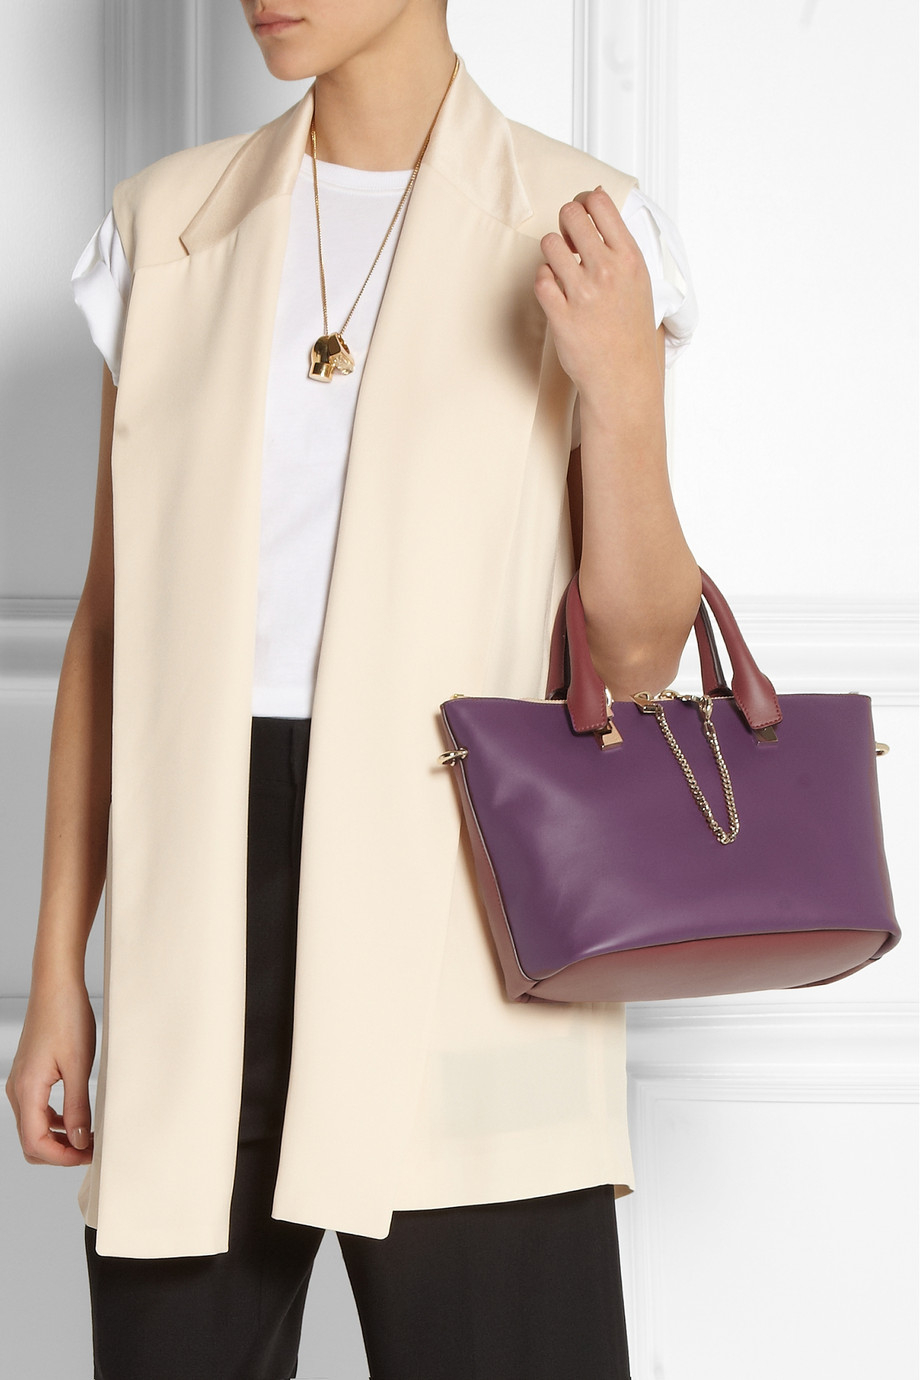 chloe handbags shop online - chloe burgundy leather handbag baylee